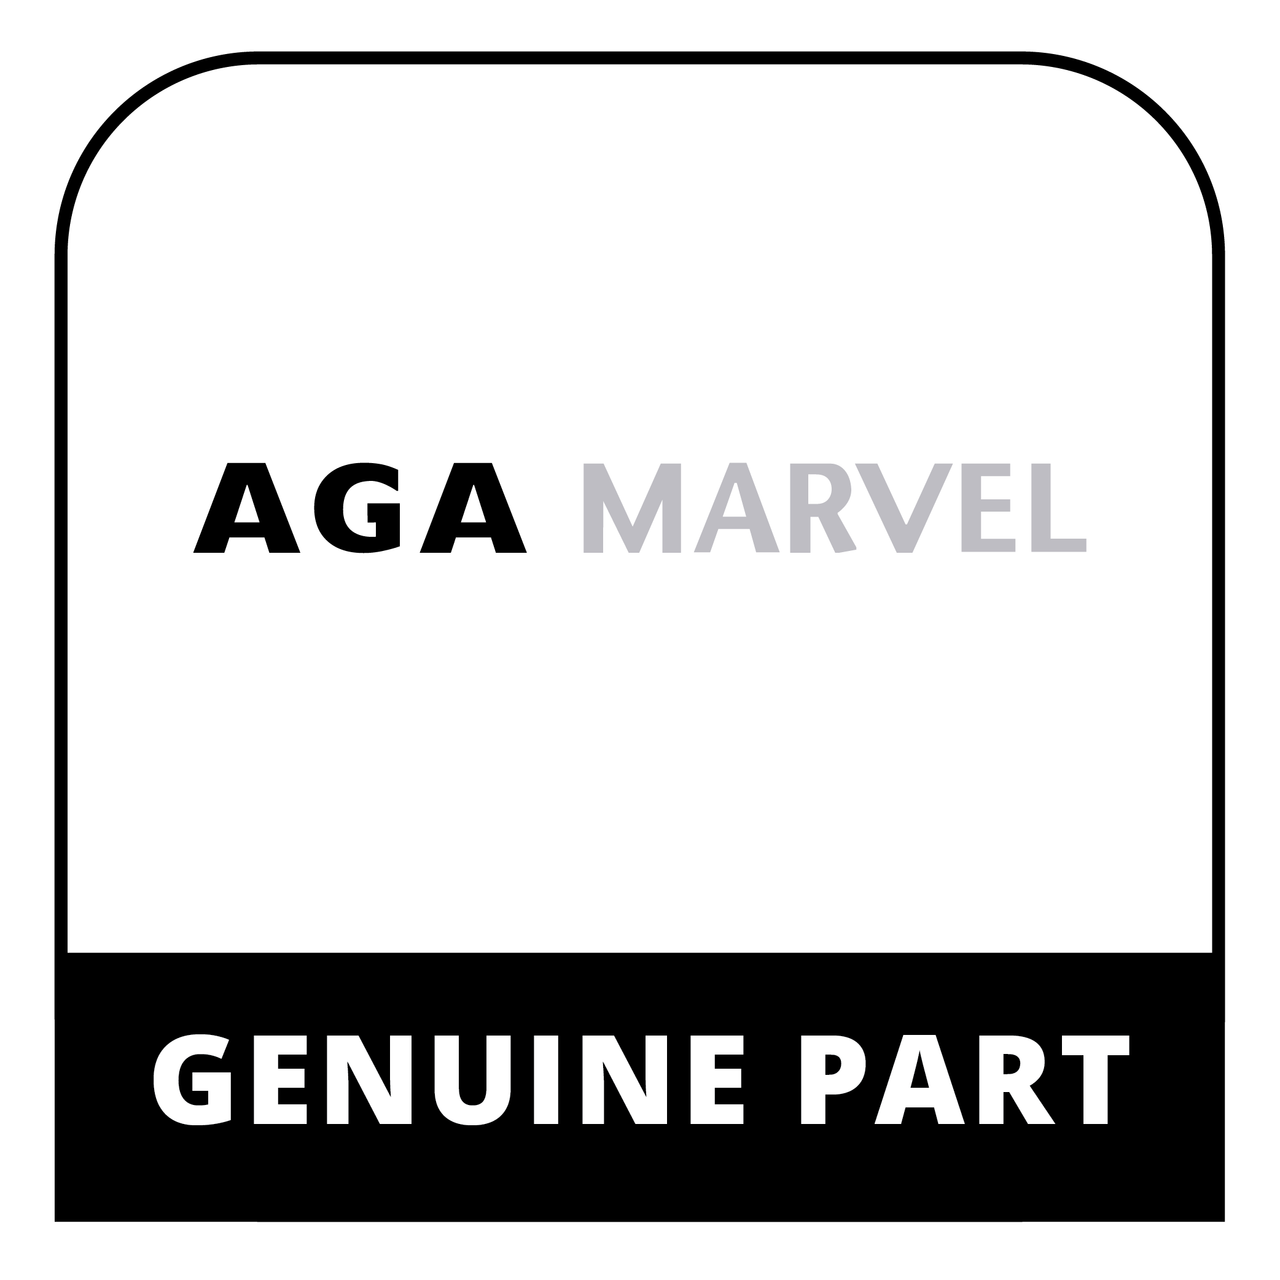 AGA Marvel FS4M997207 - D00005Axx - L/Wen Brn N.G - Genuine AGA Marvel Part